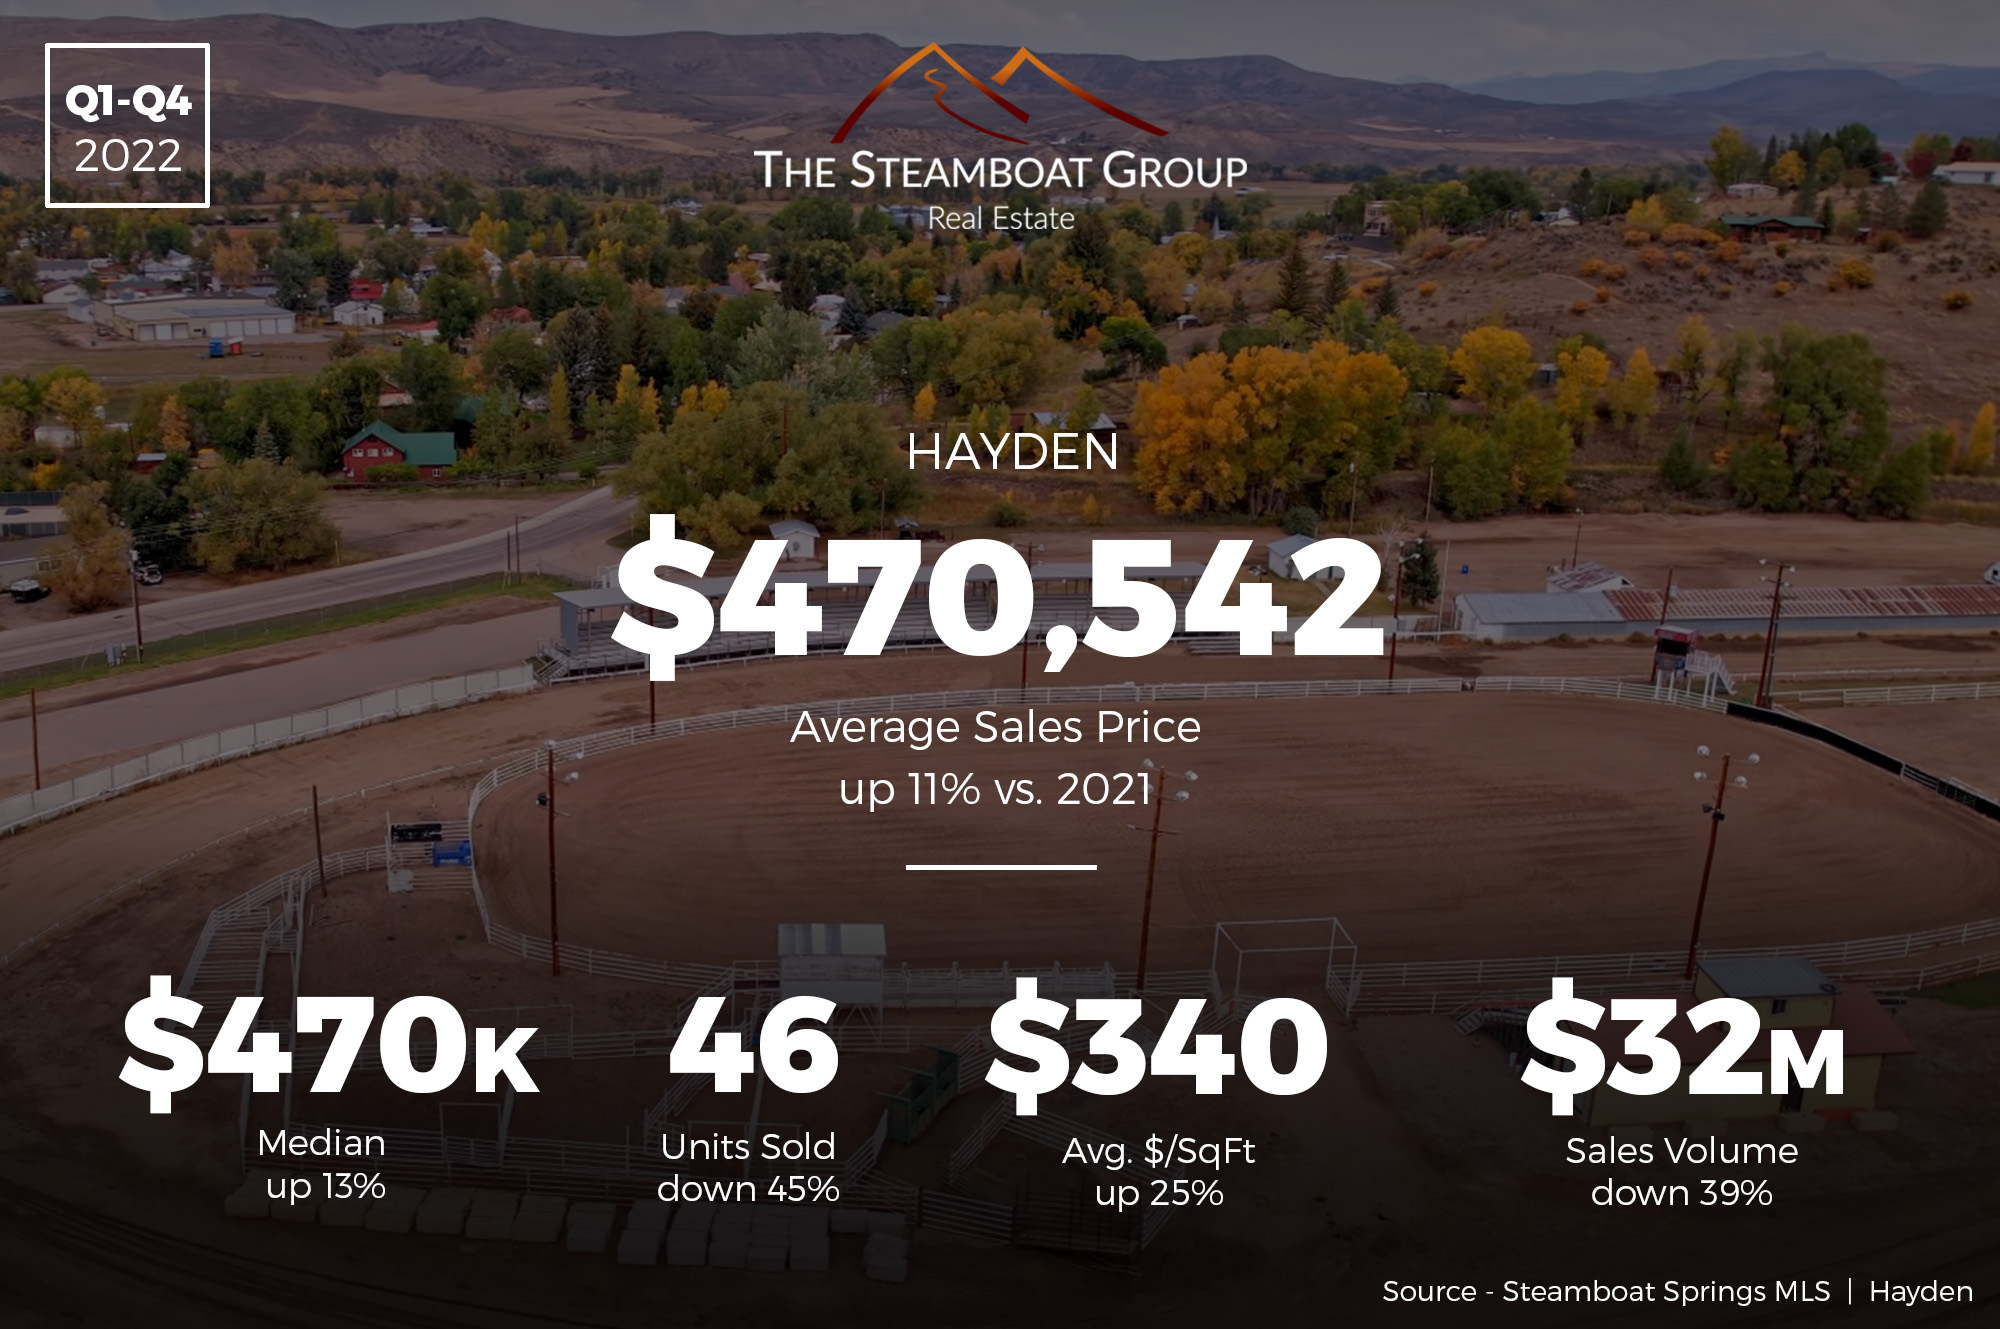 Market Update: 2022 Q4 Hayden Real Estate